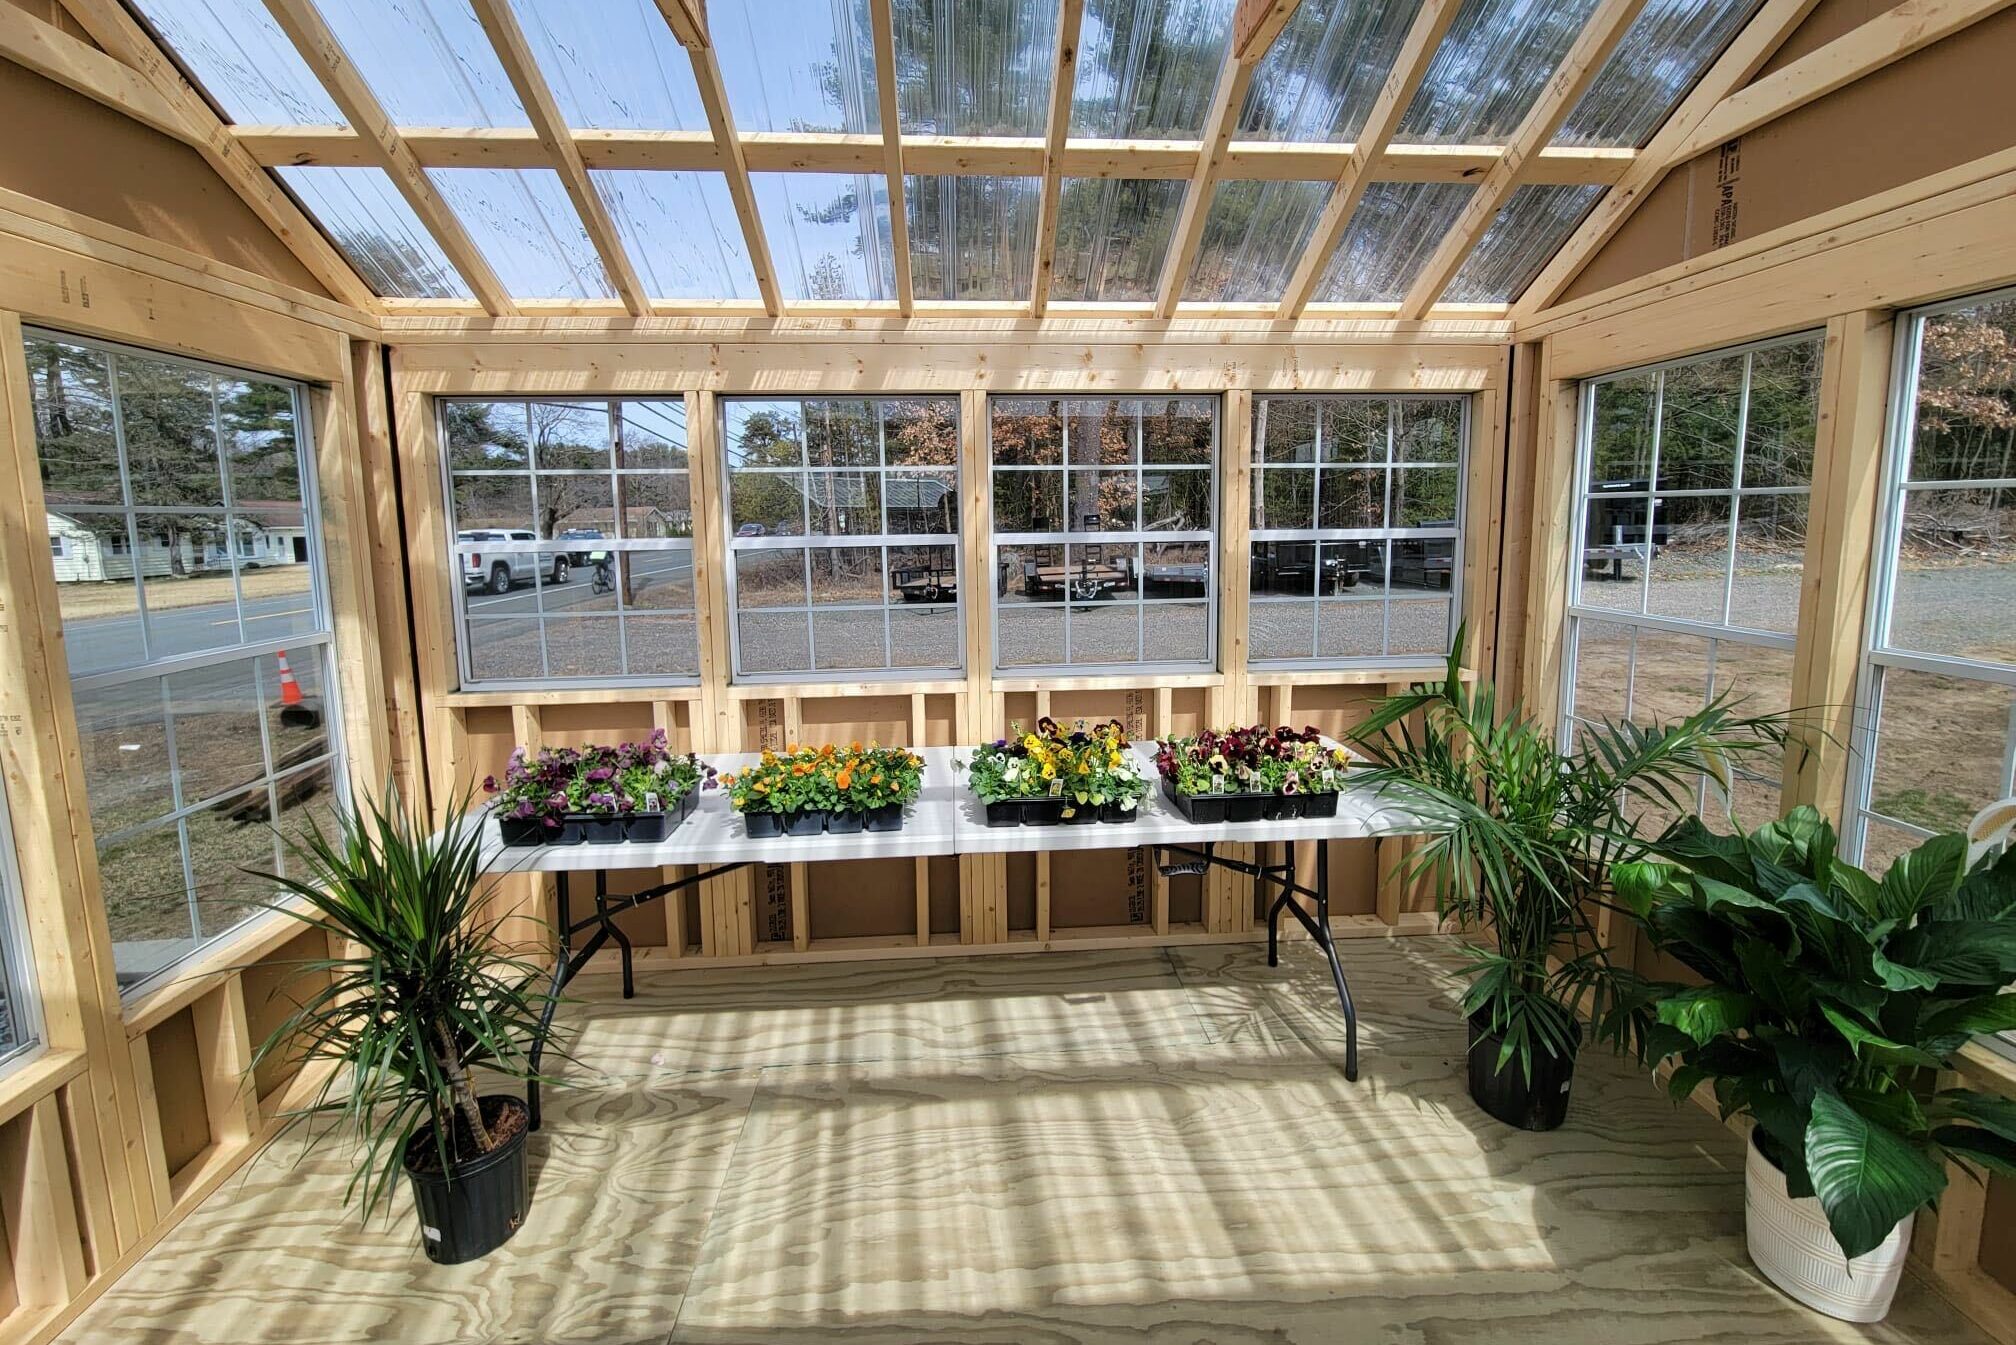 Interior Greenhouse Design Ideas